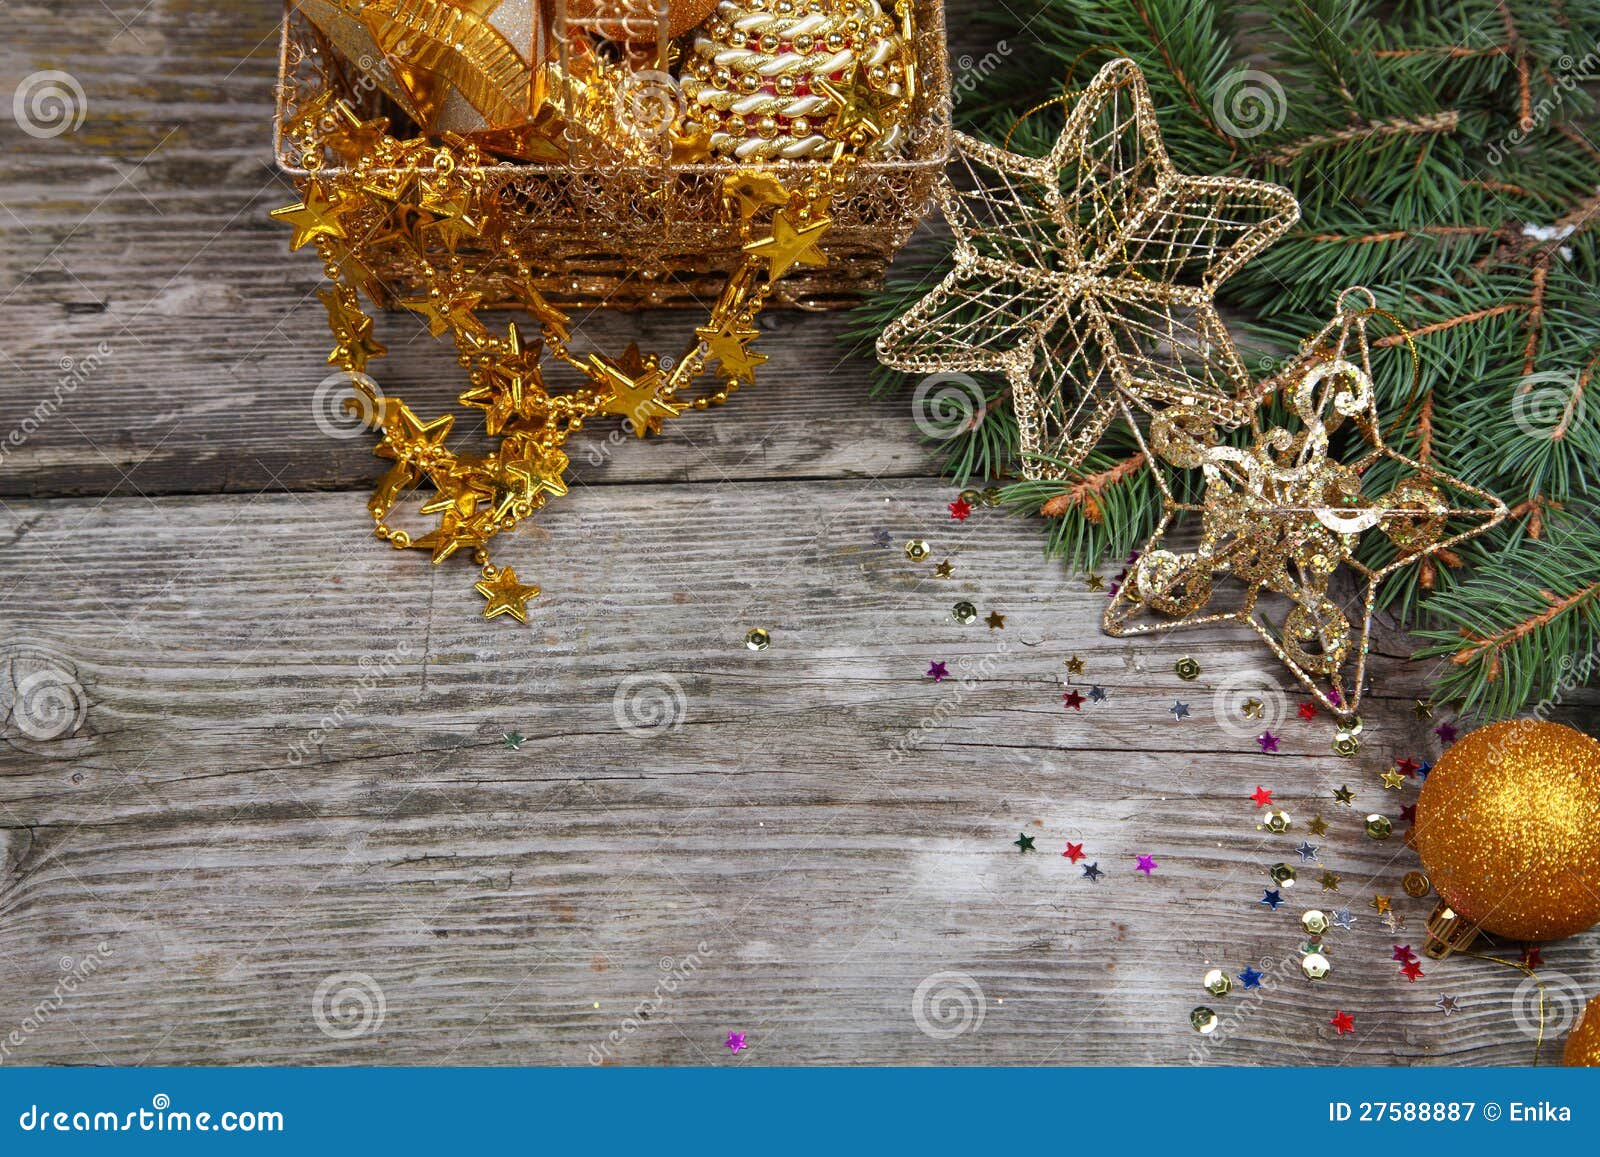 Golden Christmas Decorations Stock Image - Image of decoration, symbol ...